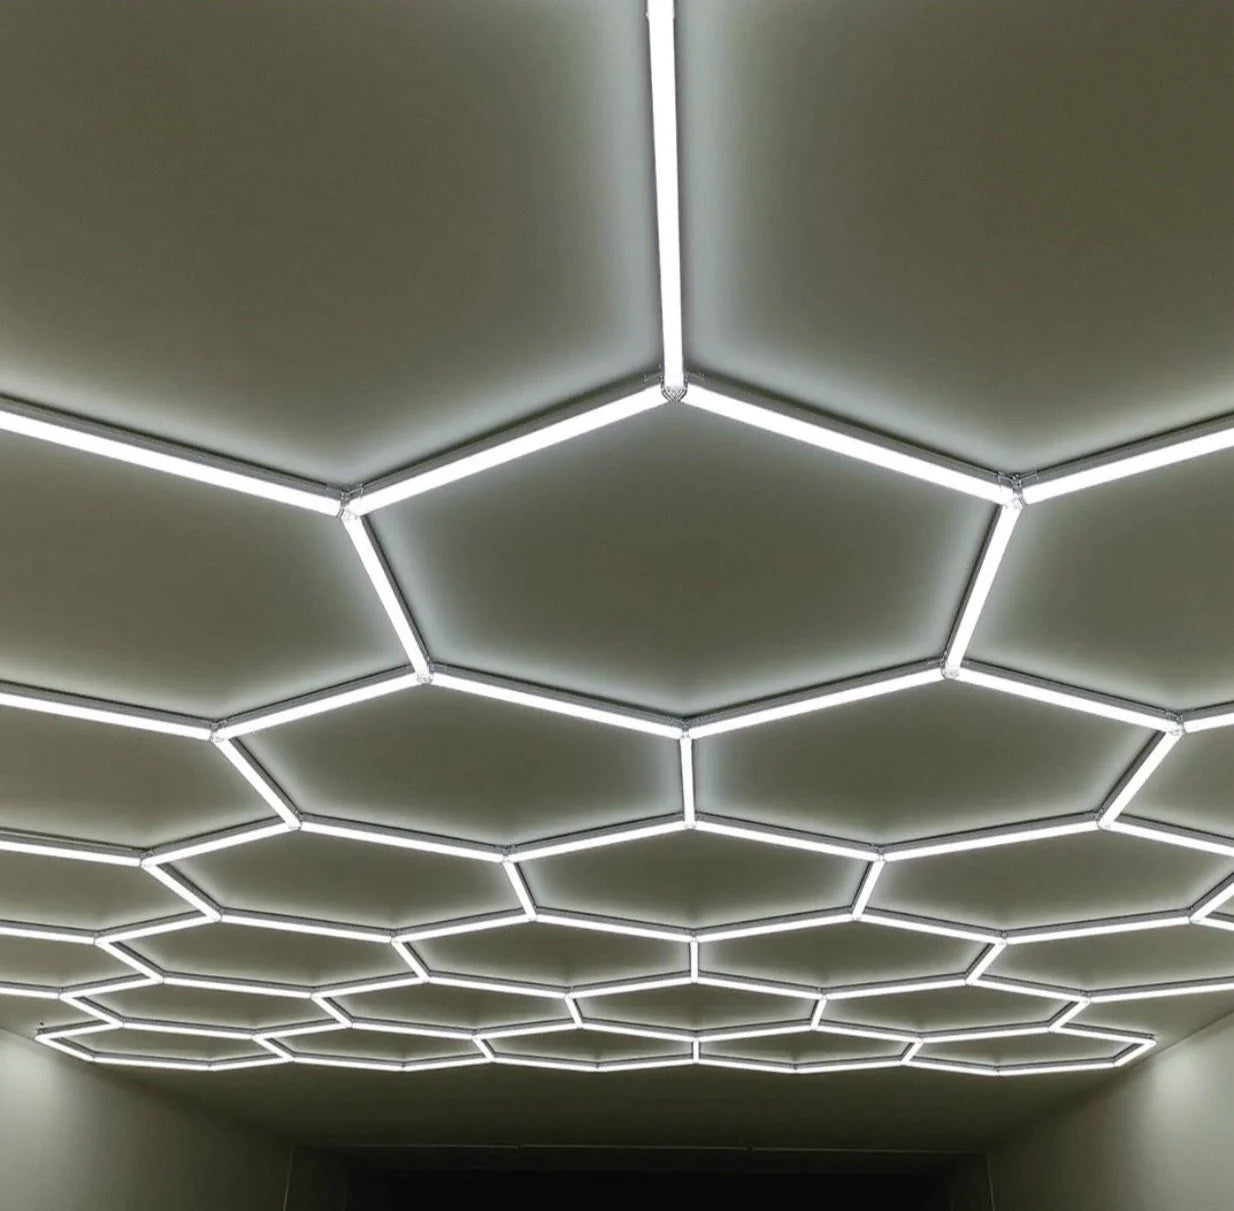 Hexagon garage lighting